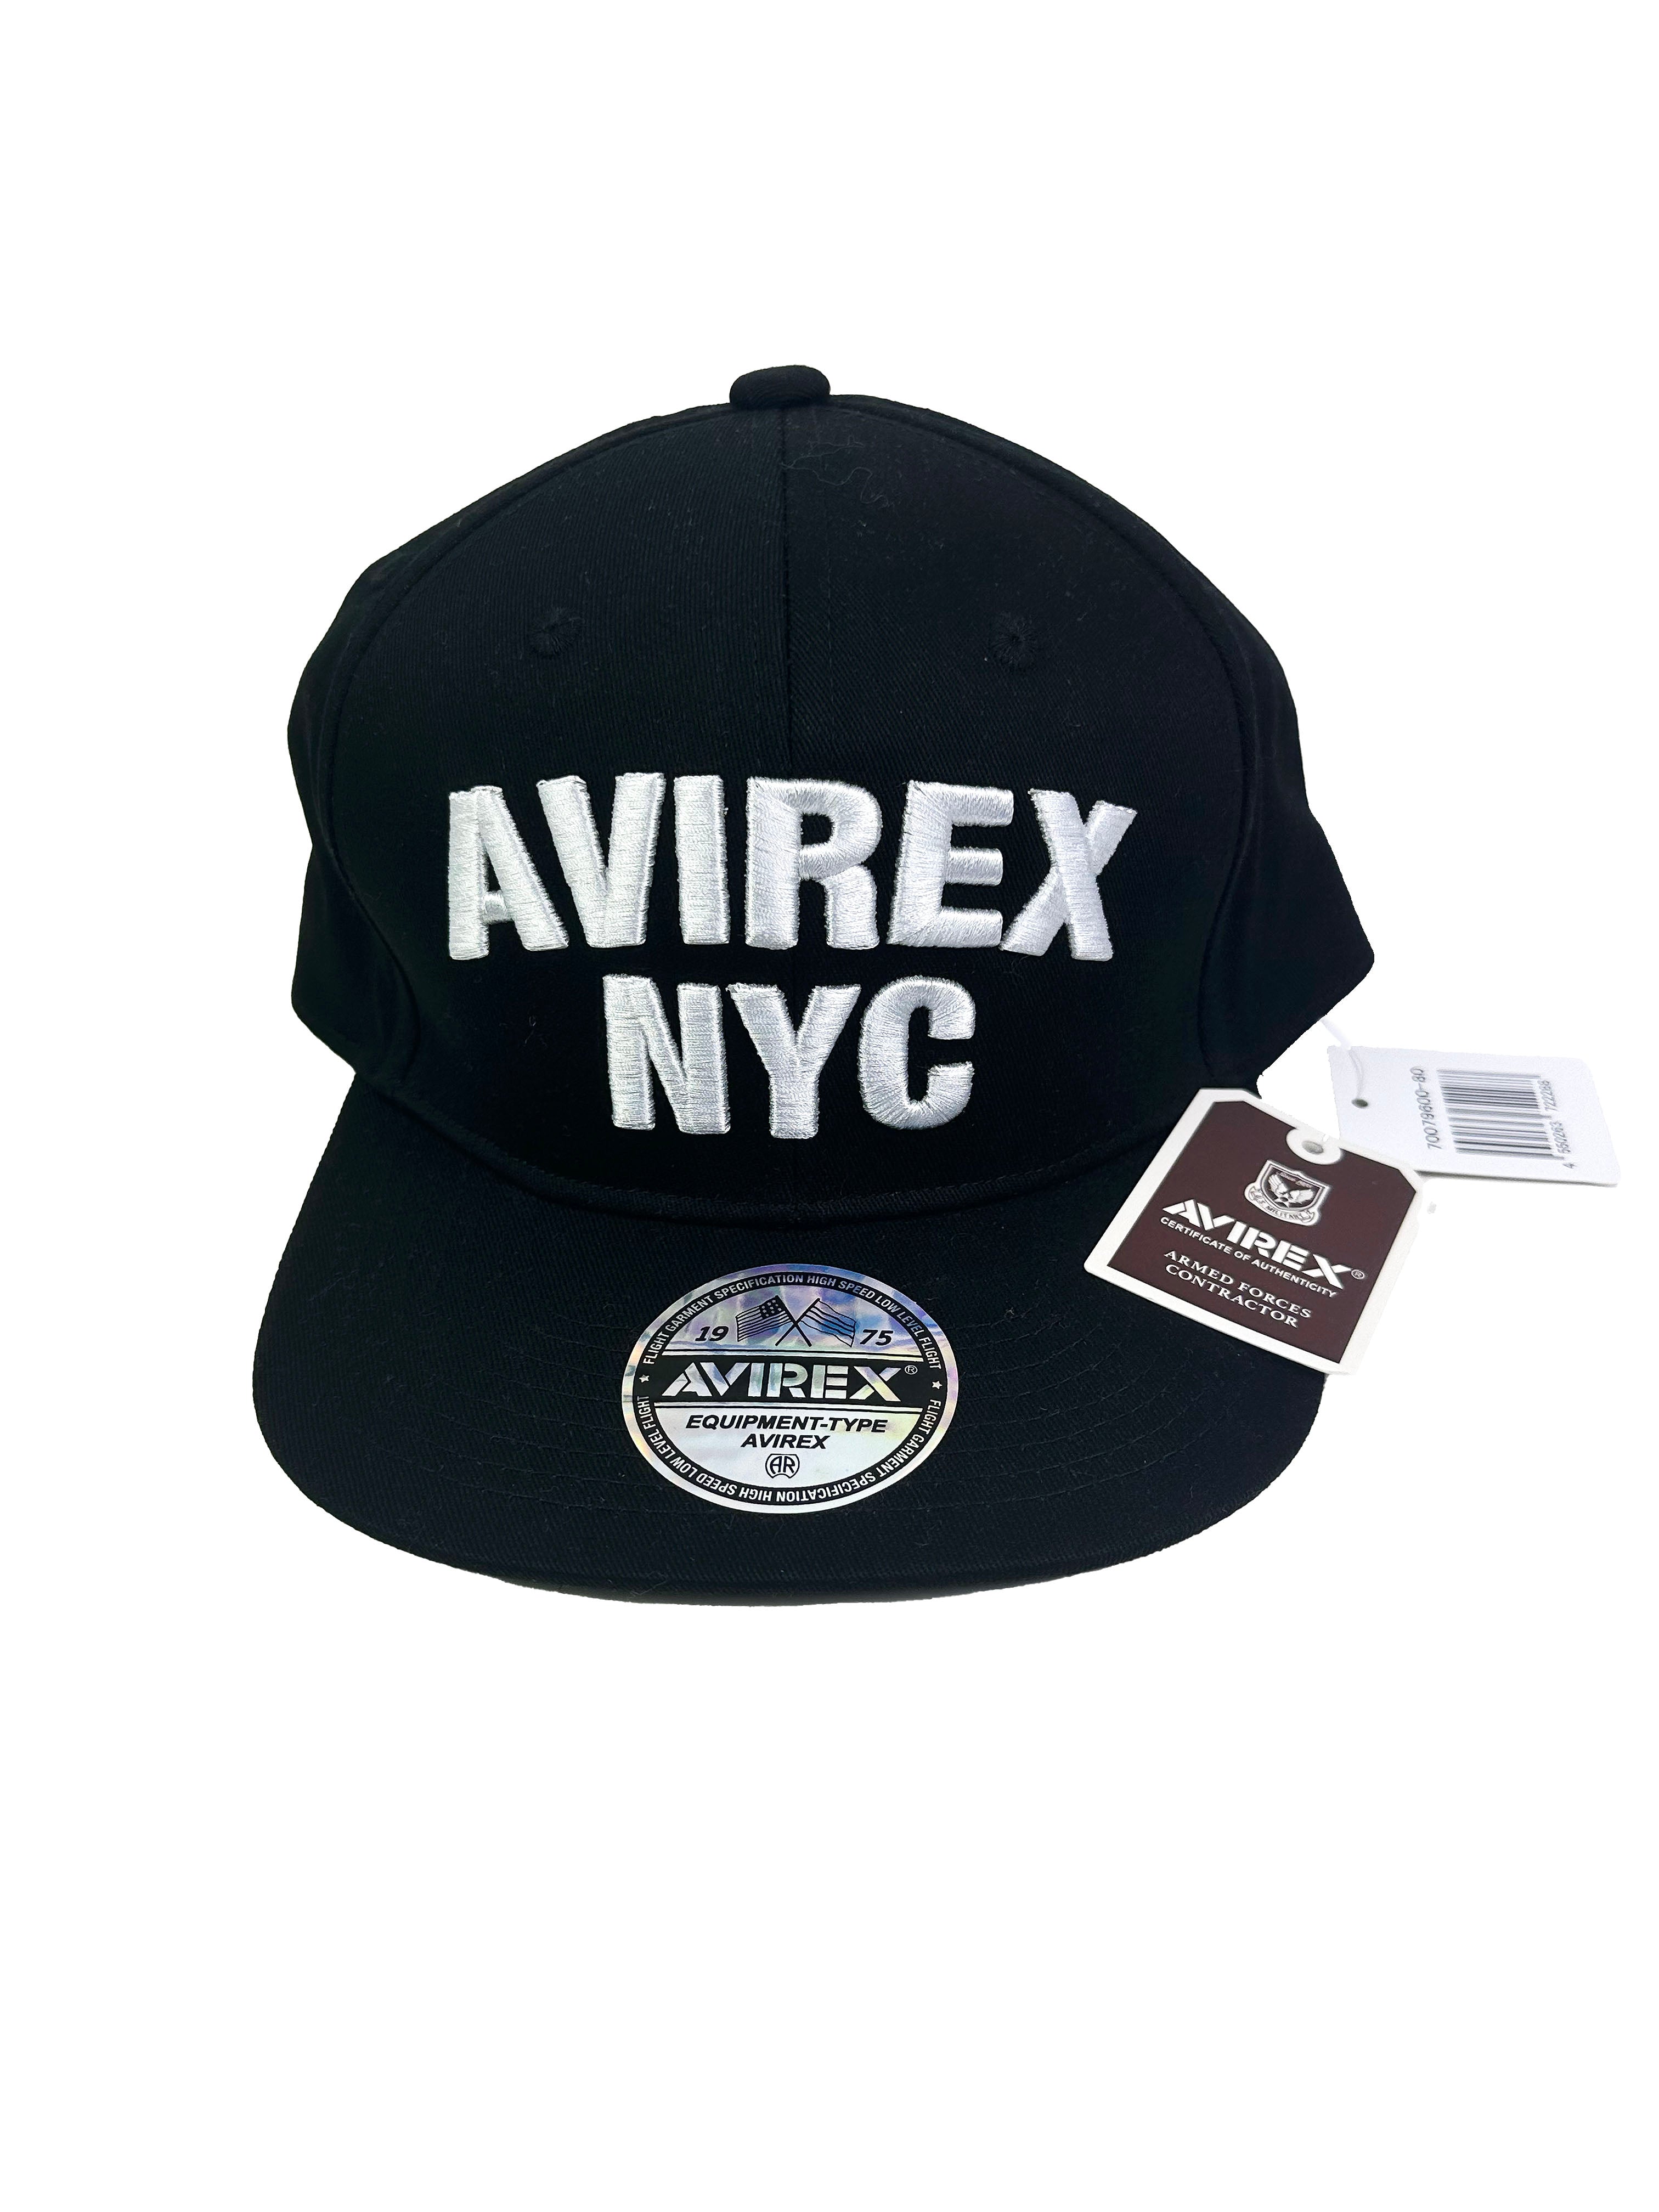 Avirex Black Spell Out Hat BNWT